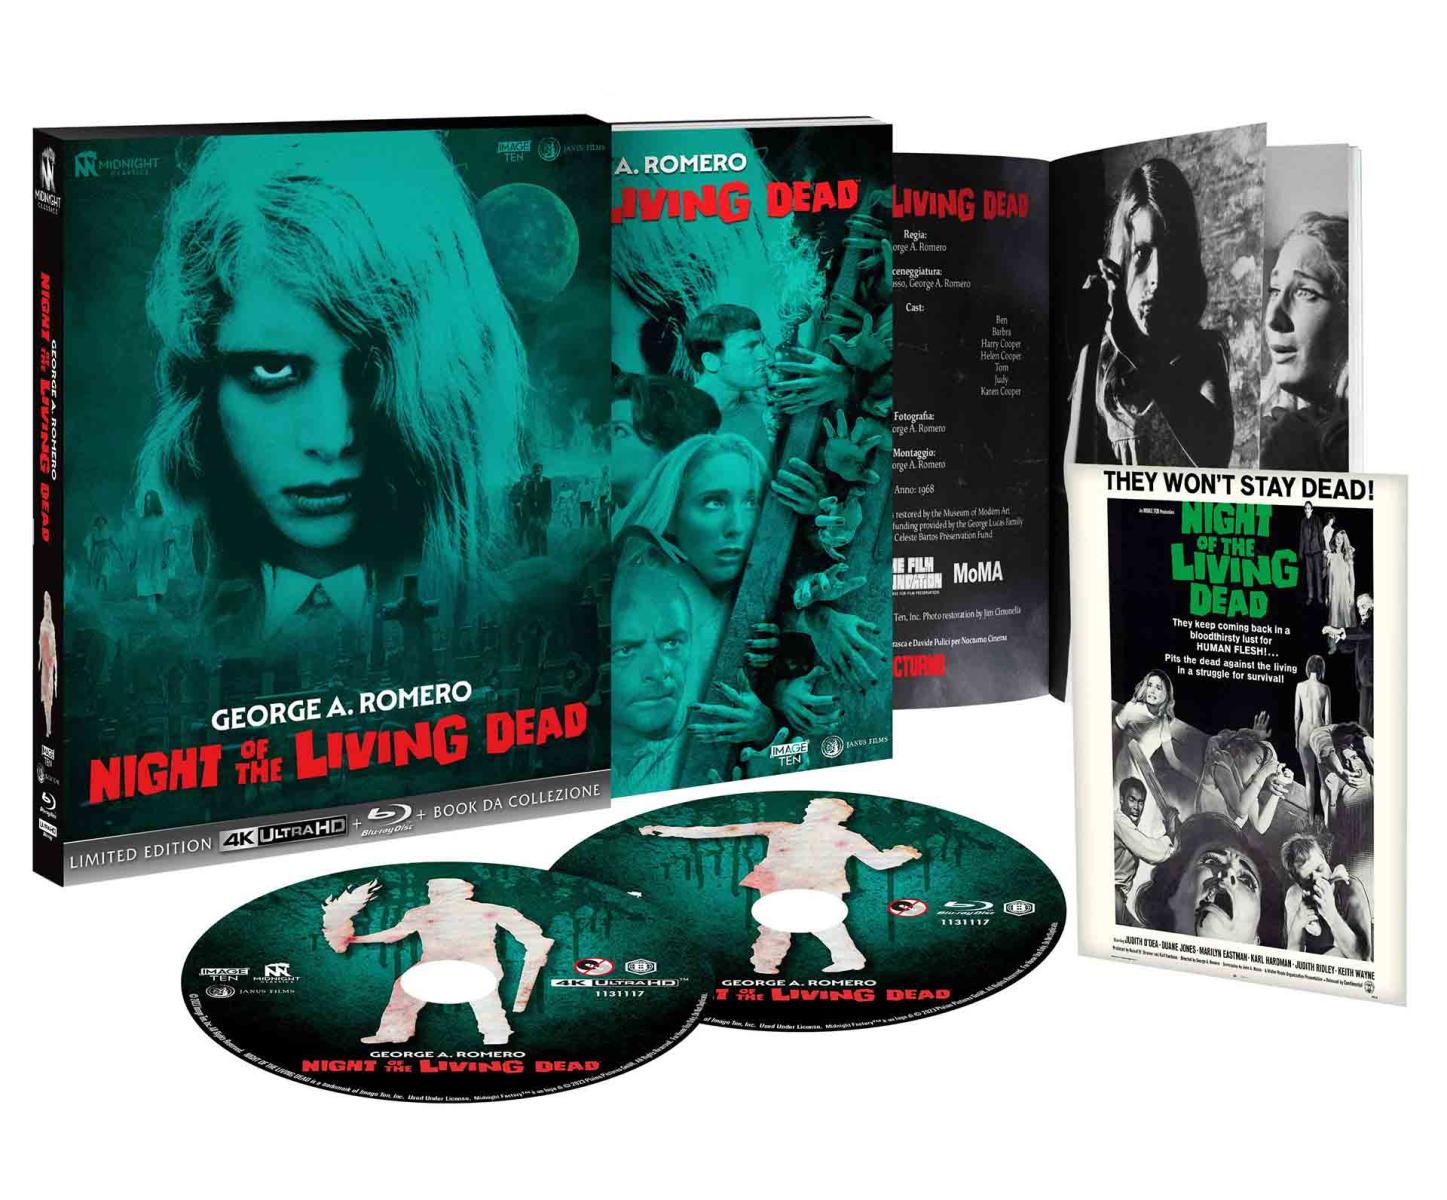 Night of the Living Dead - Limited Edition 4K Ultra HD + Blu-ray + Book da Collezione (Blu-ray) Image 2